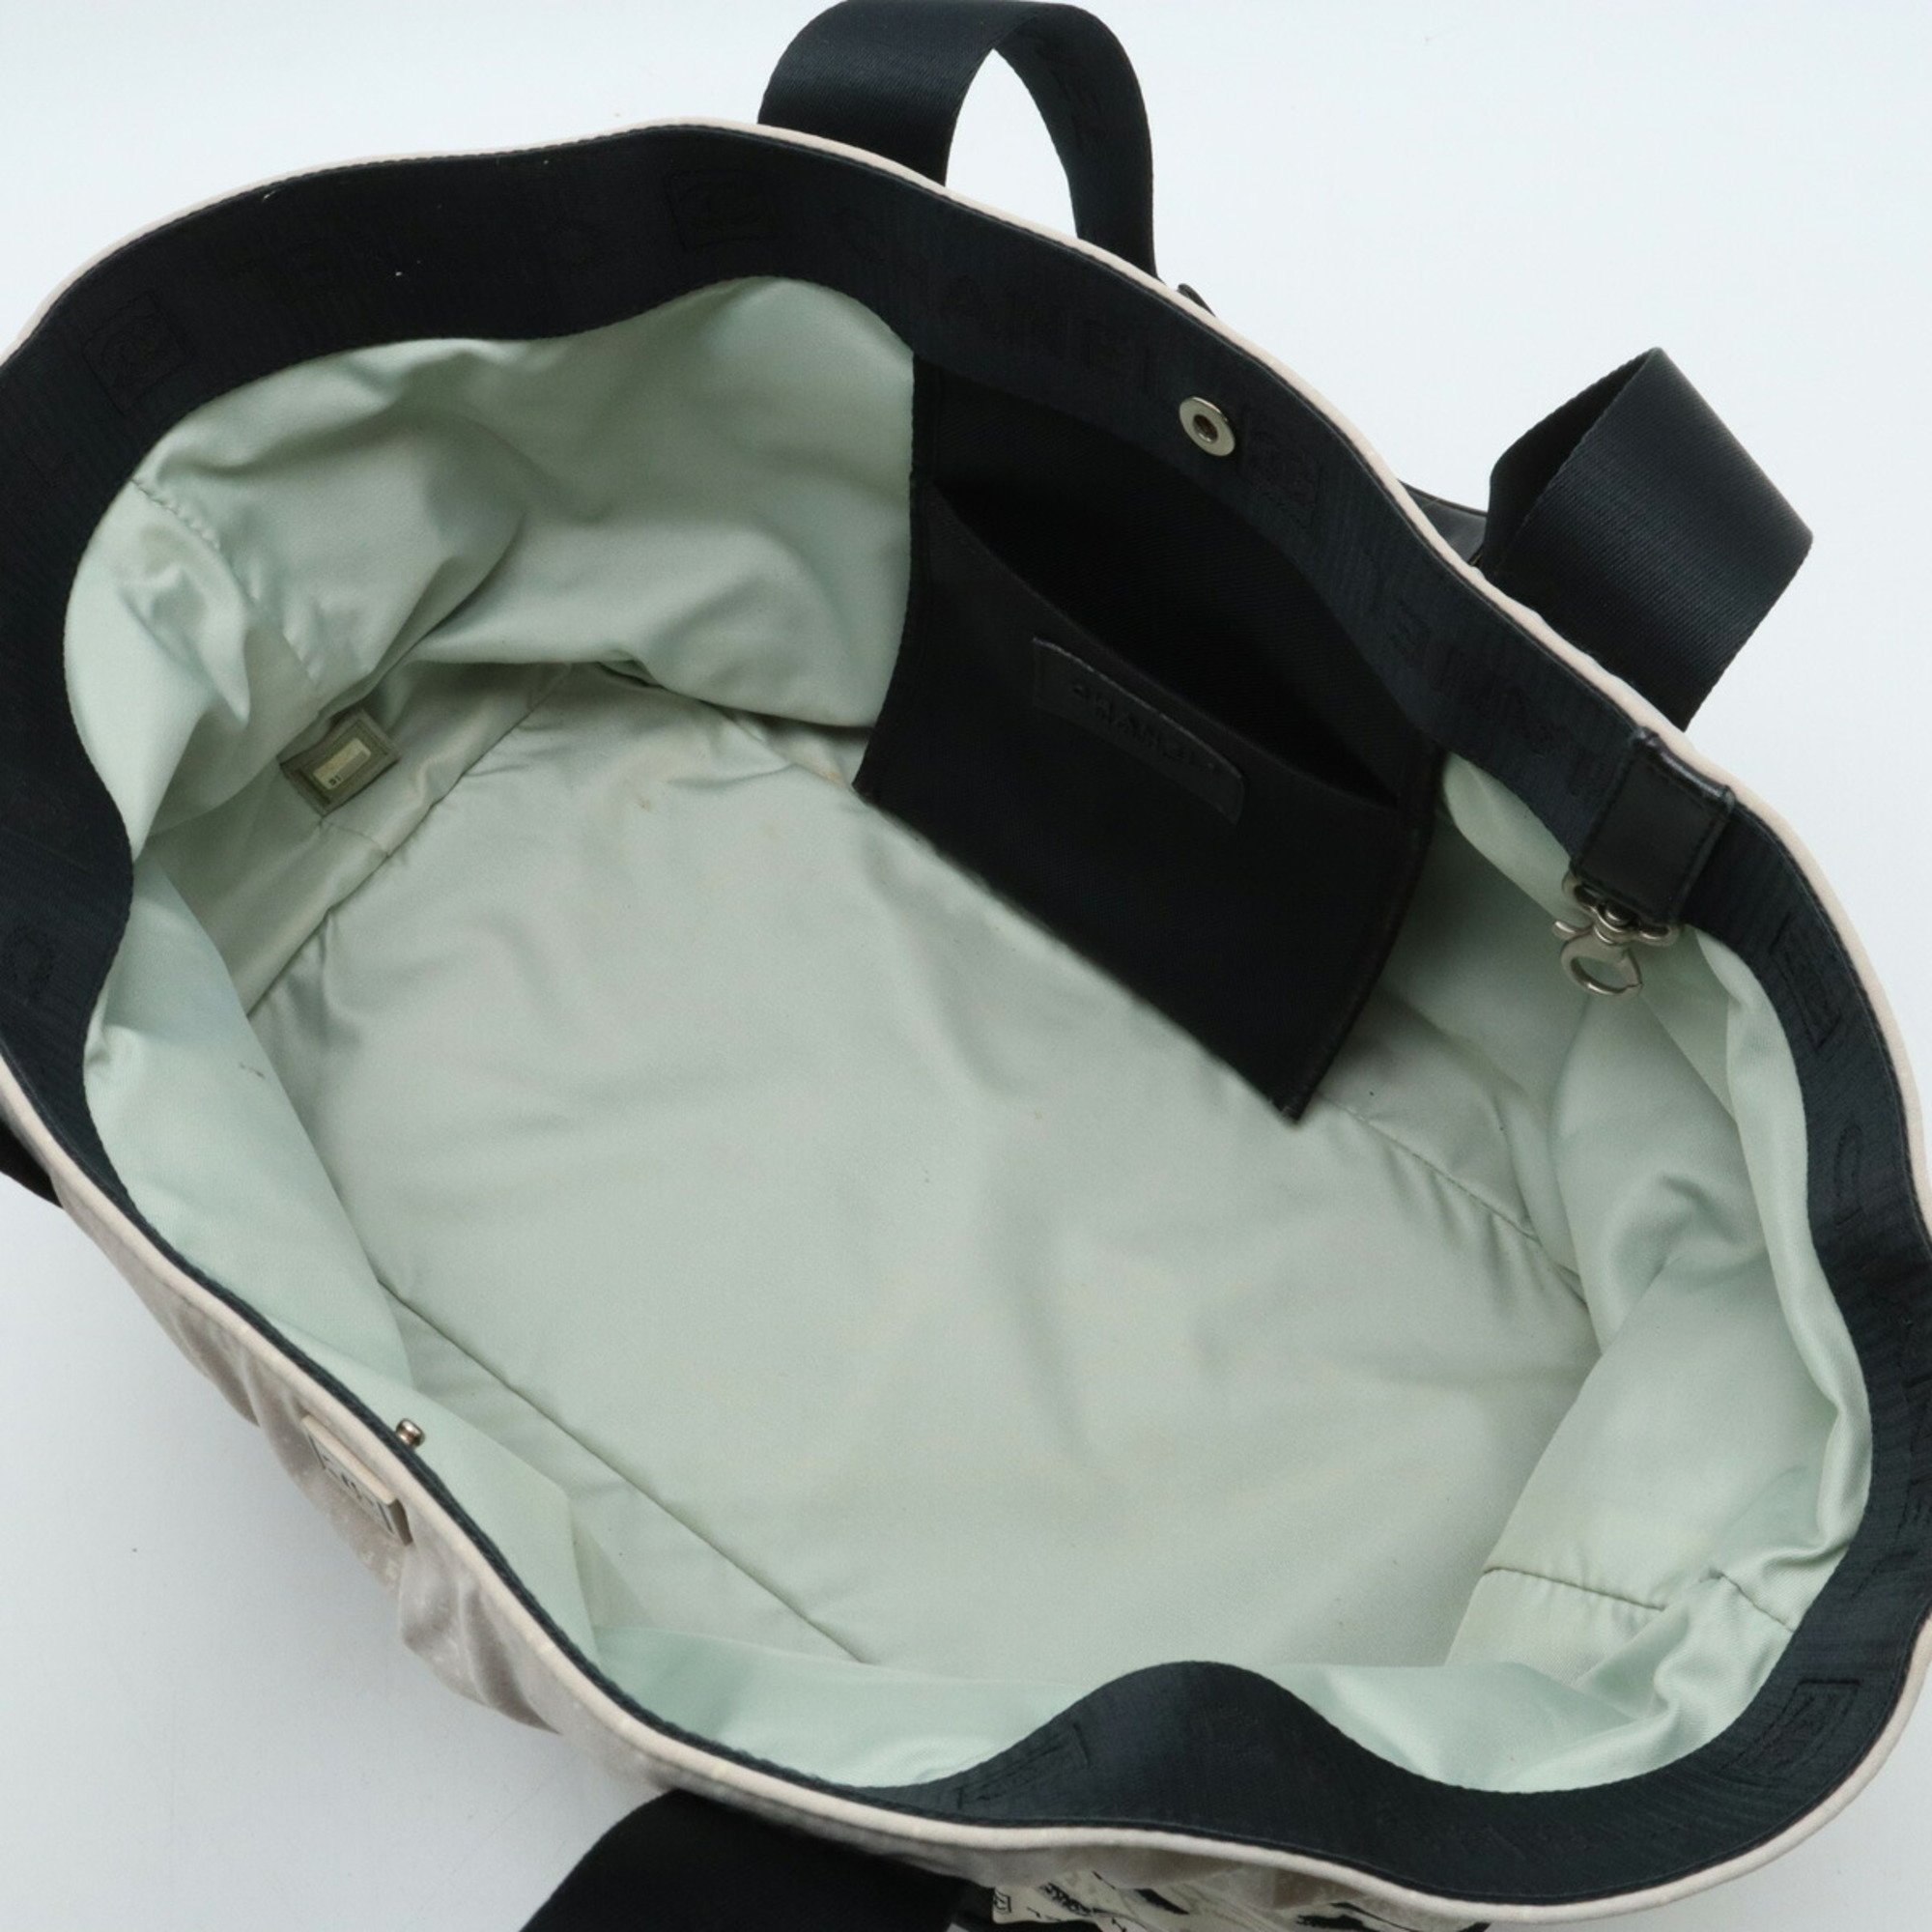 CHANEL Chanel Sport Line High Summer Tote Bag Handbag Wave Nylon Gray White Black